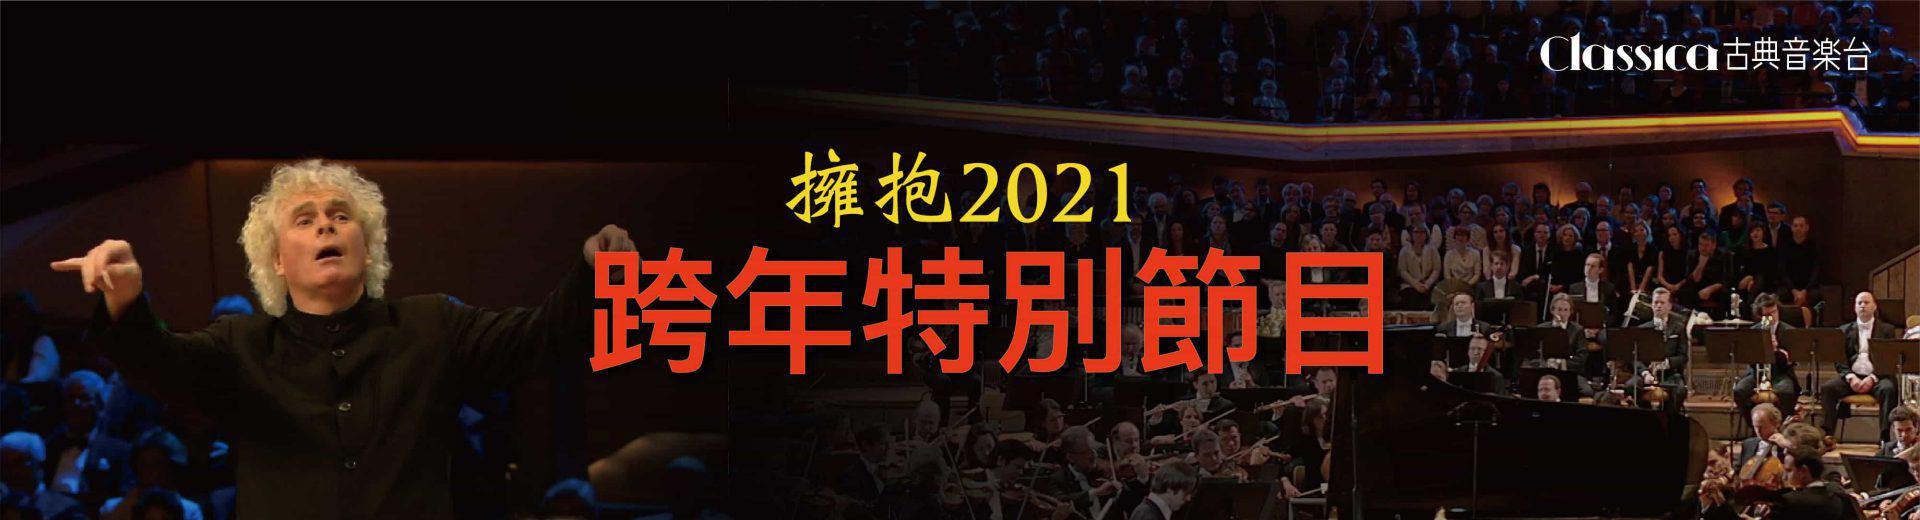 CLASSICA古典音樂台 2020年12月推薦節目